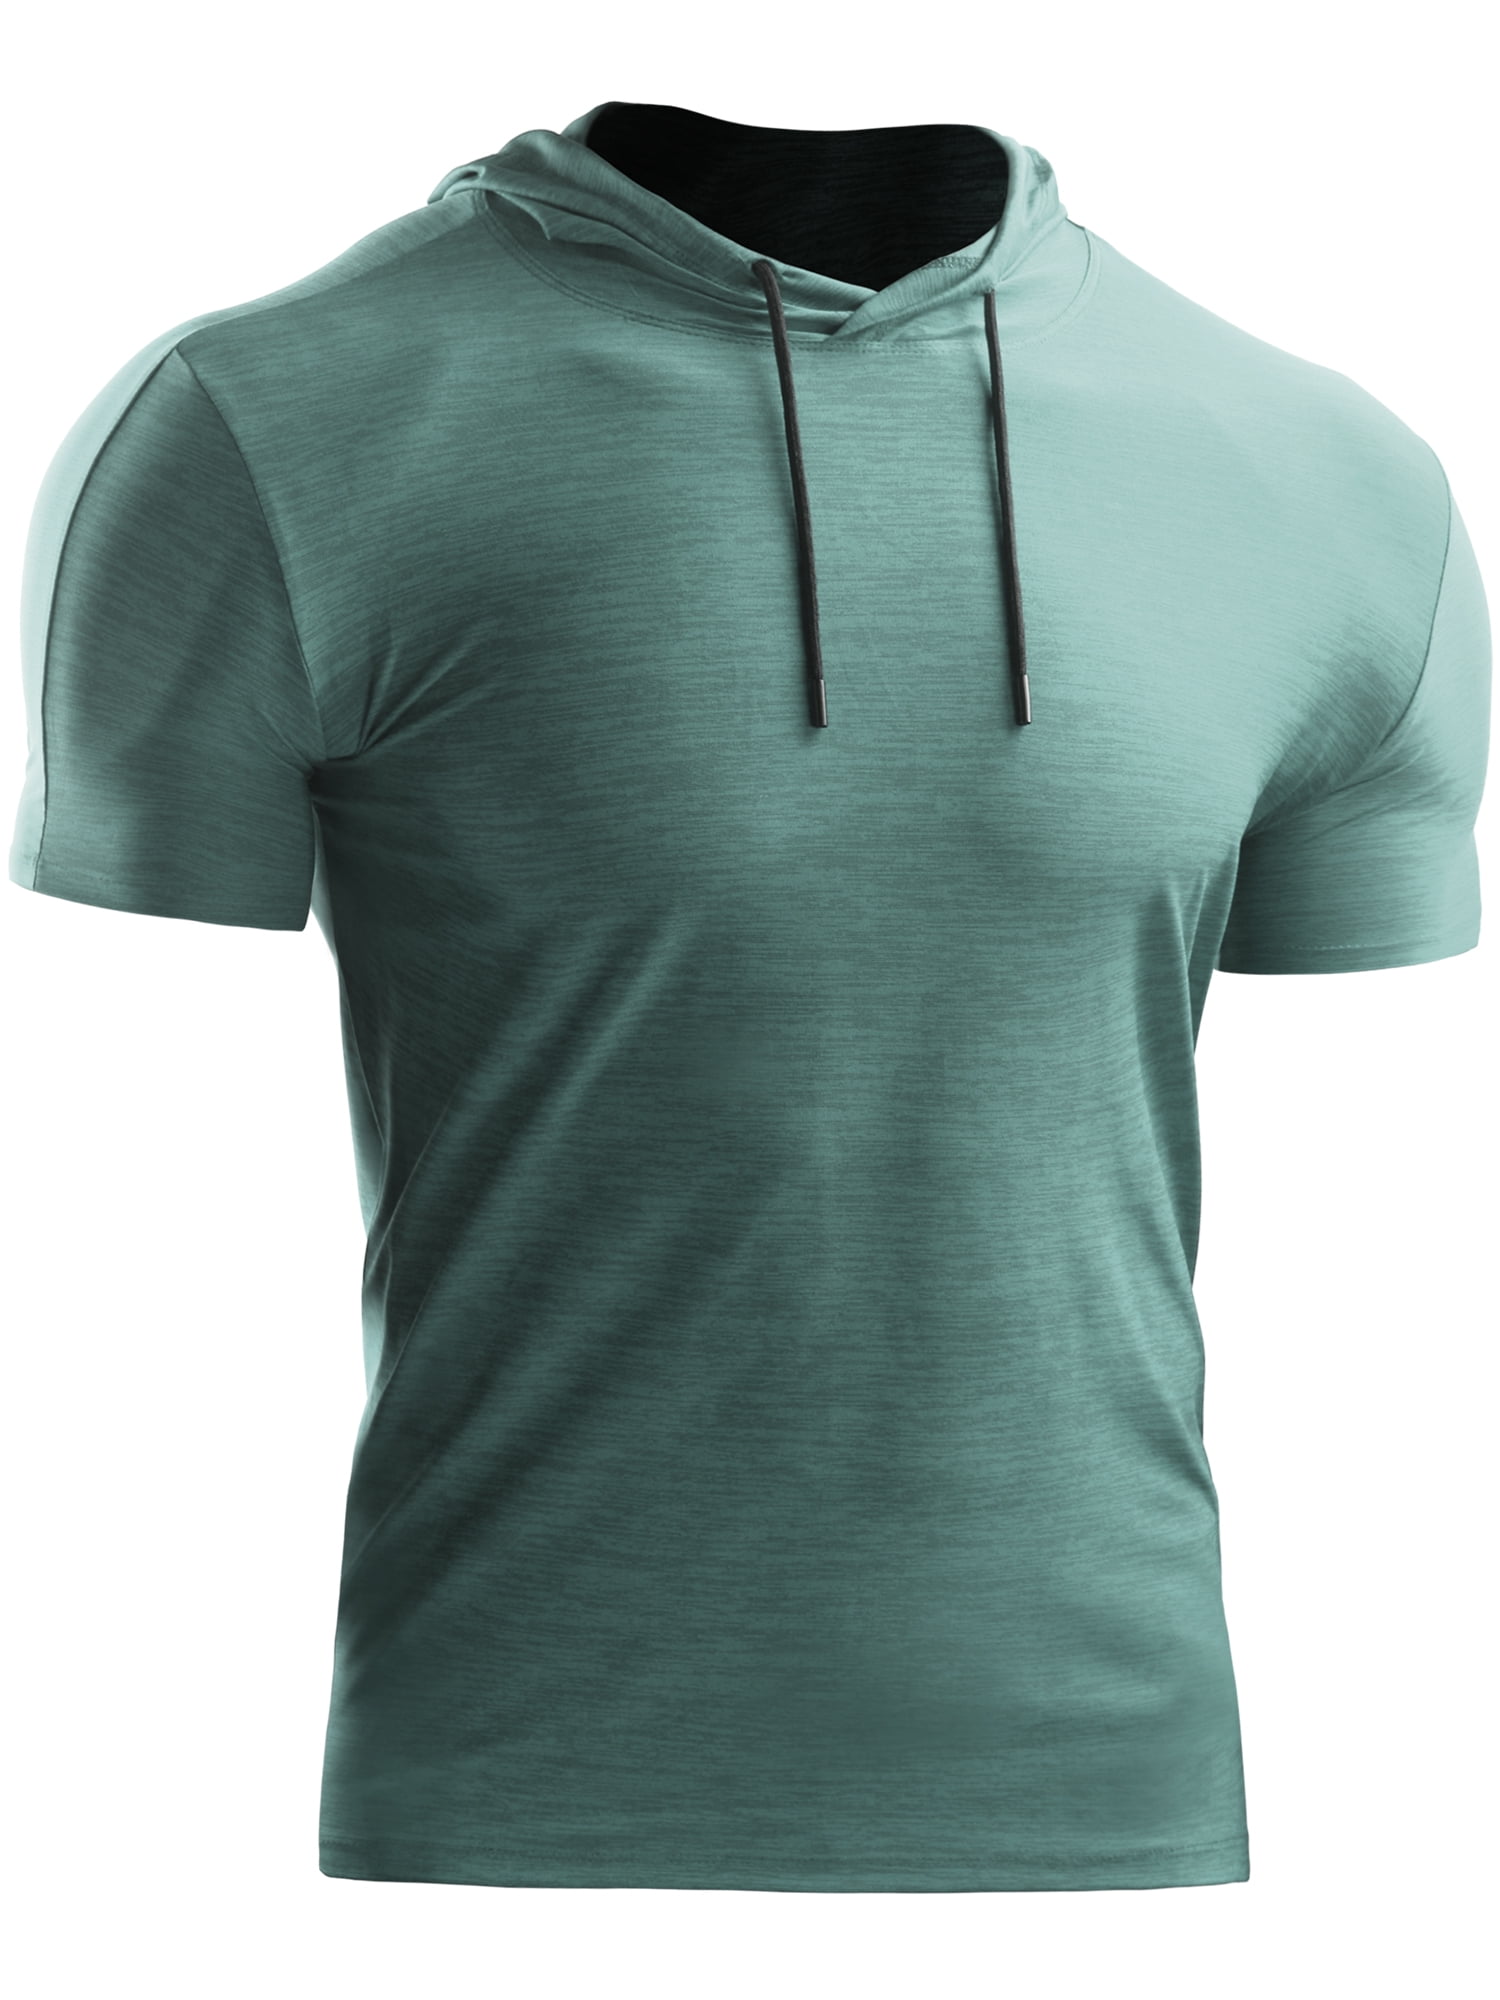 Men Summer Shirt,Fineser Mens Short Sleeve Solid Hooded Splice Fake Two Pieces Casual Sport Tee Shirt Top Sweatshirt 